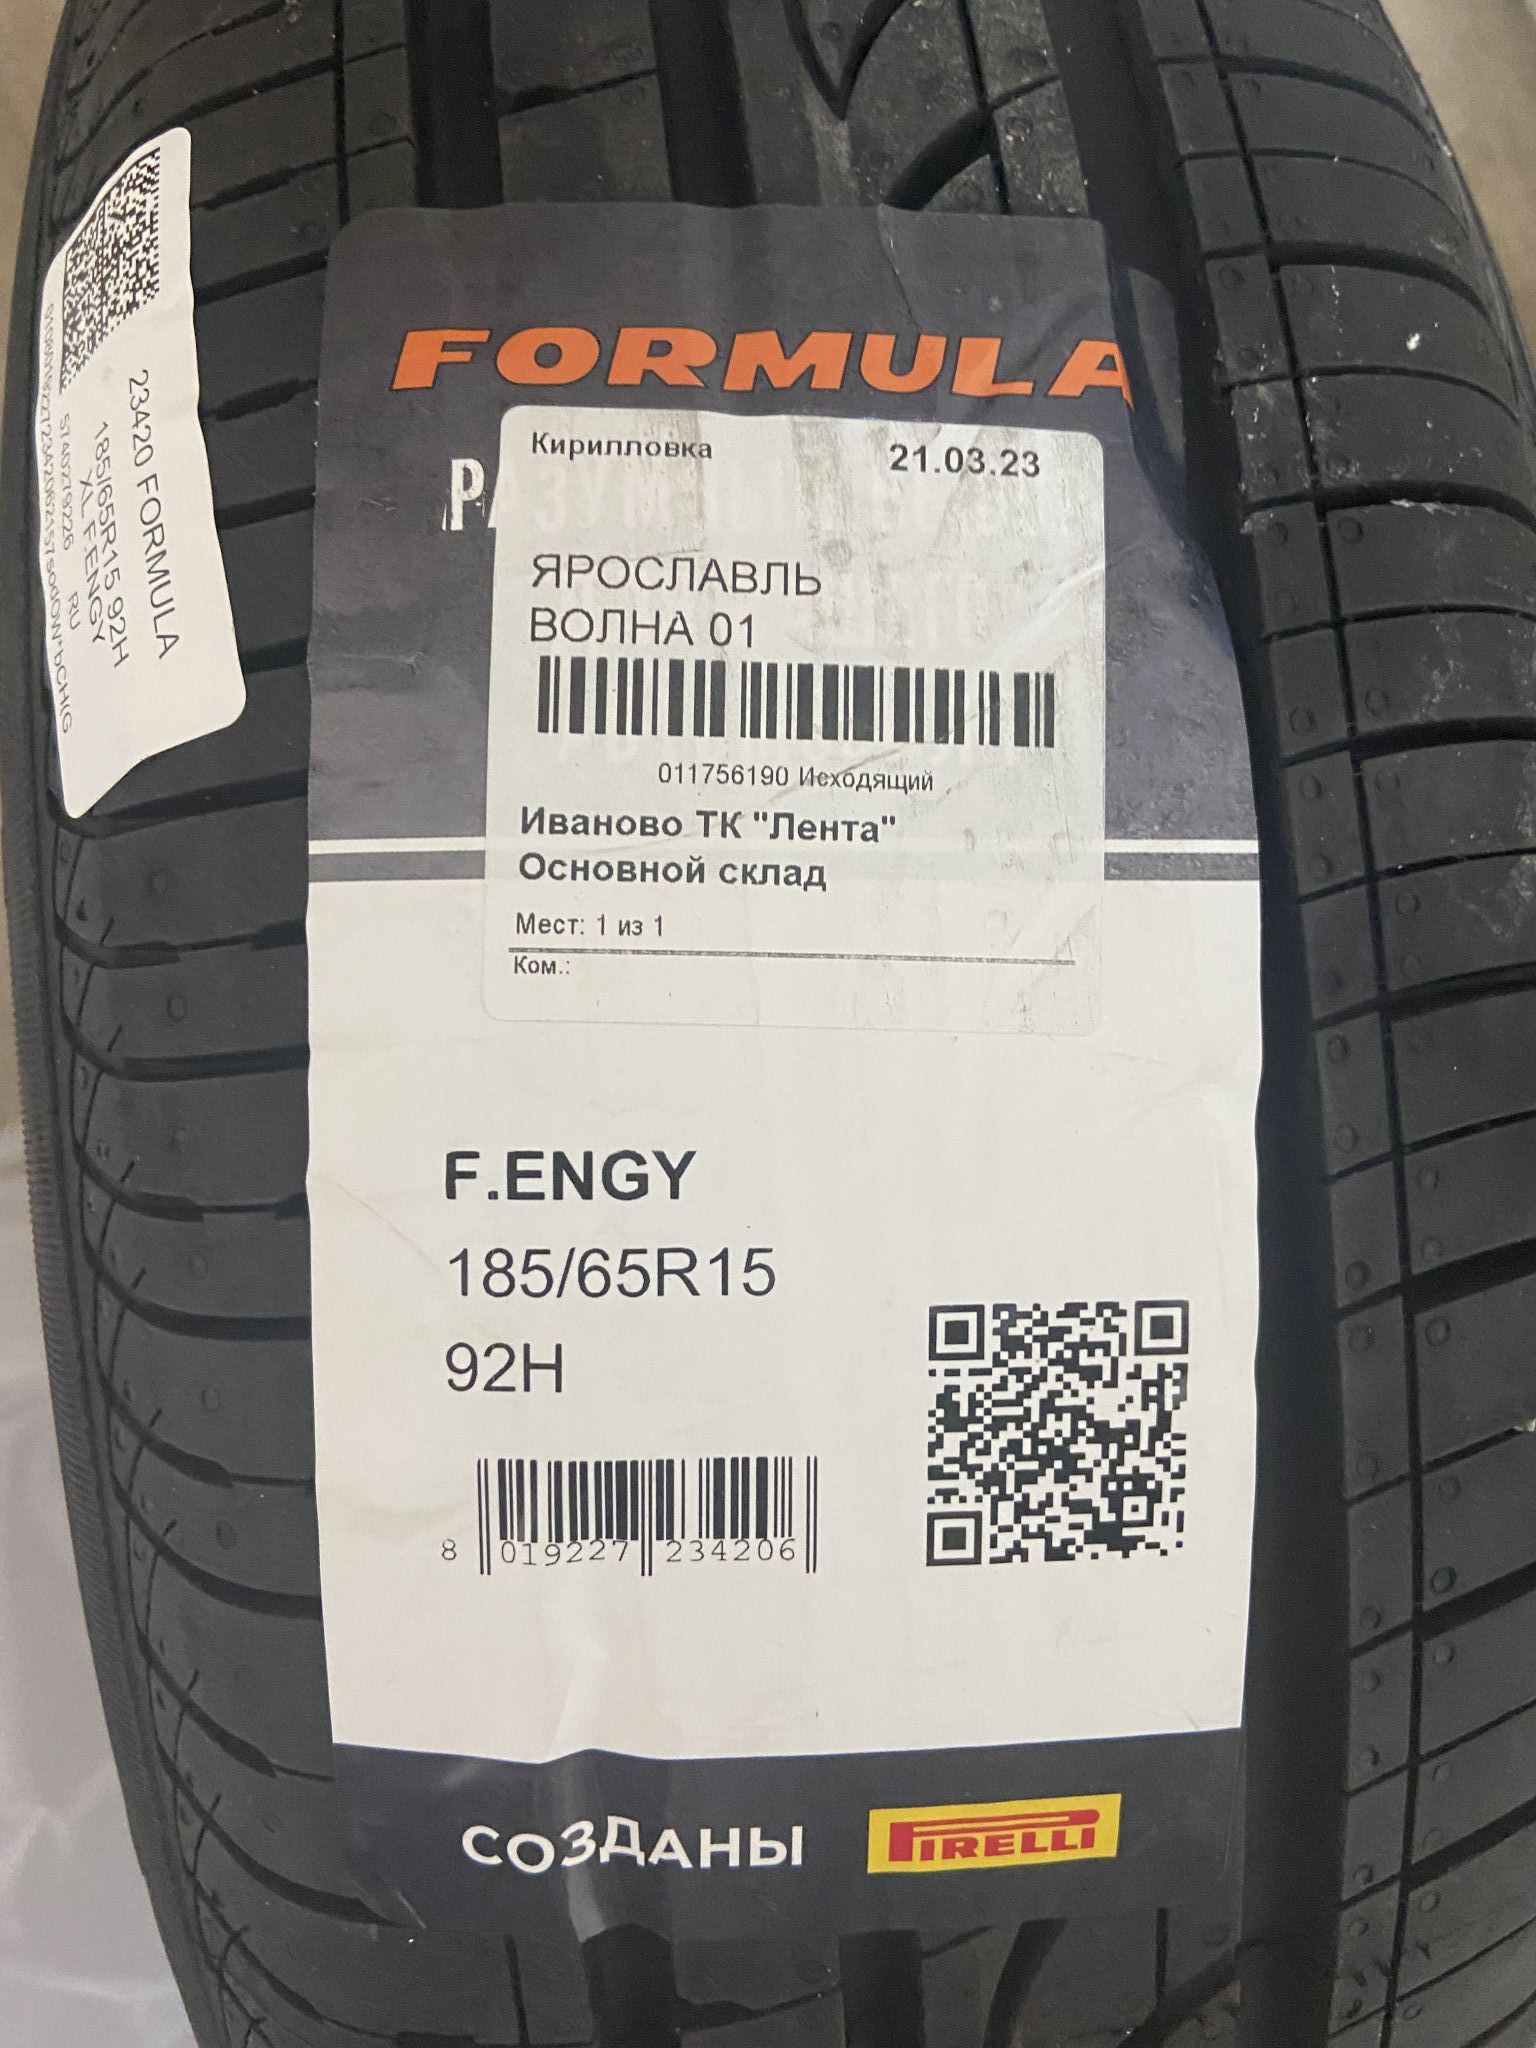 Pirelli formula energy 185 65 r15 отзывы